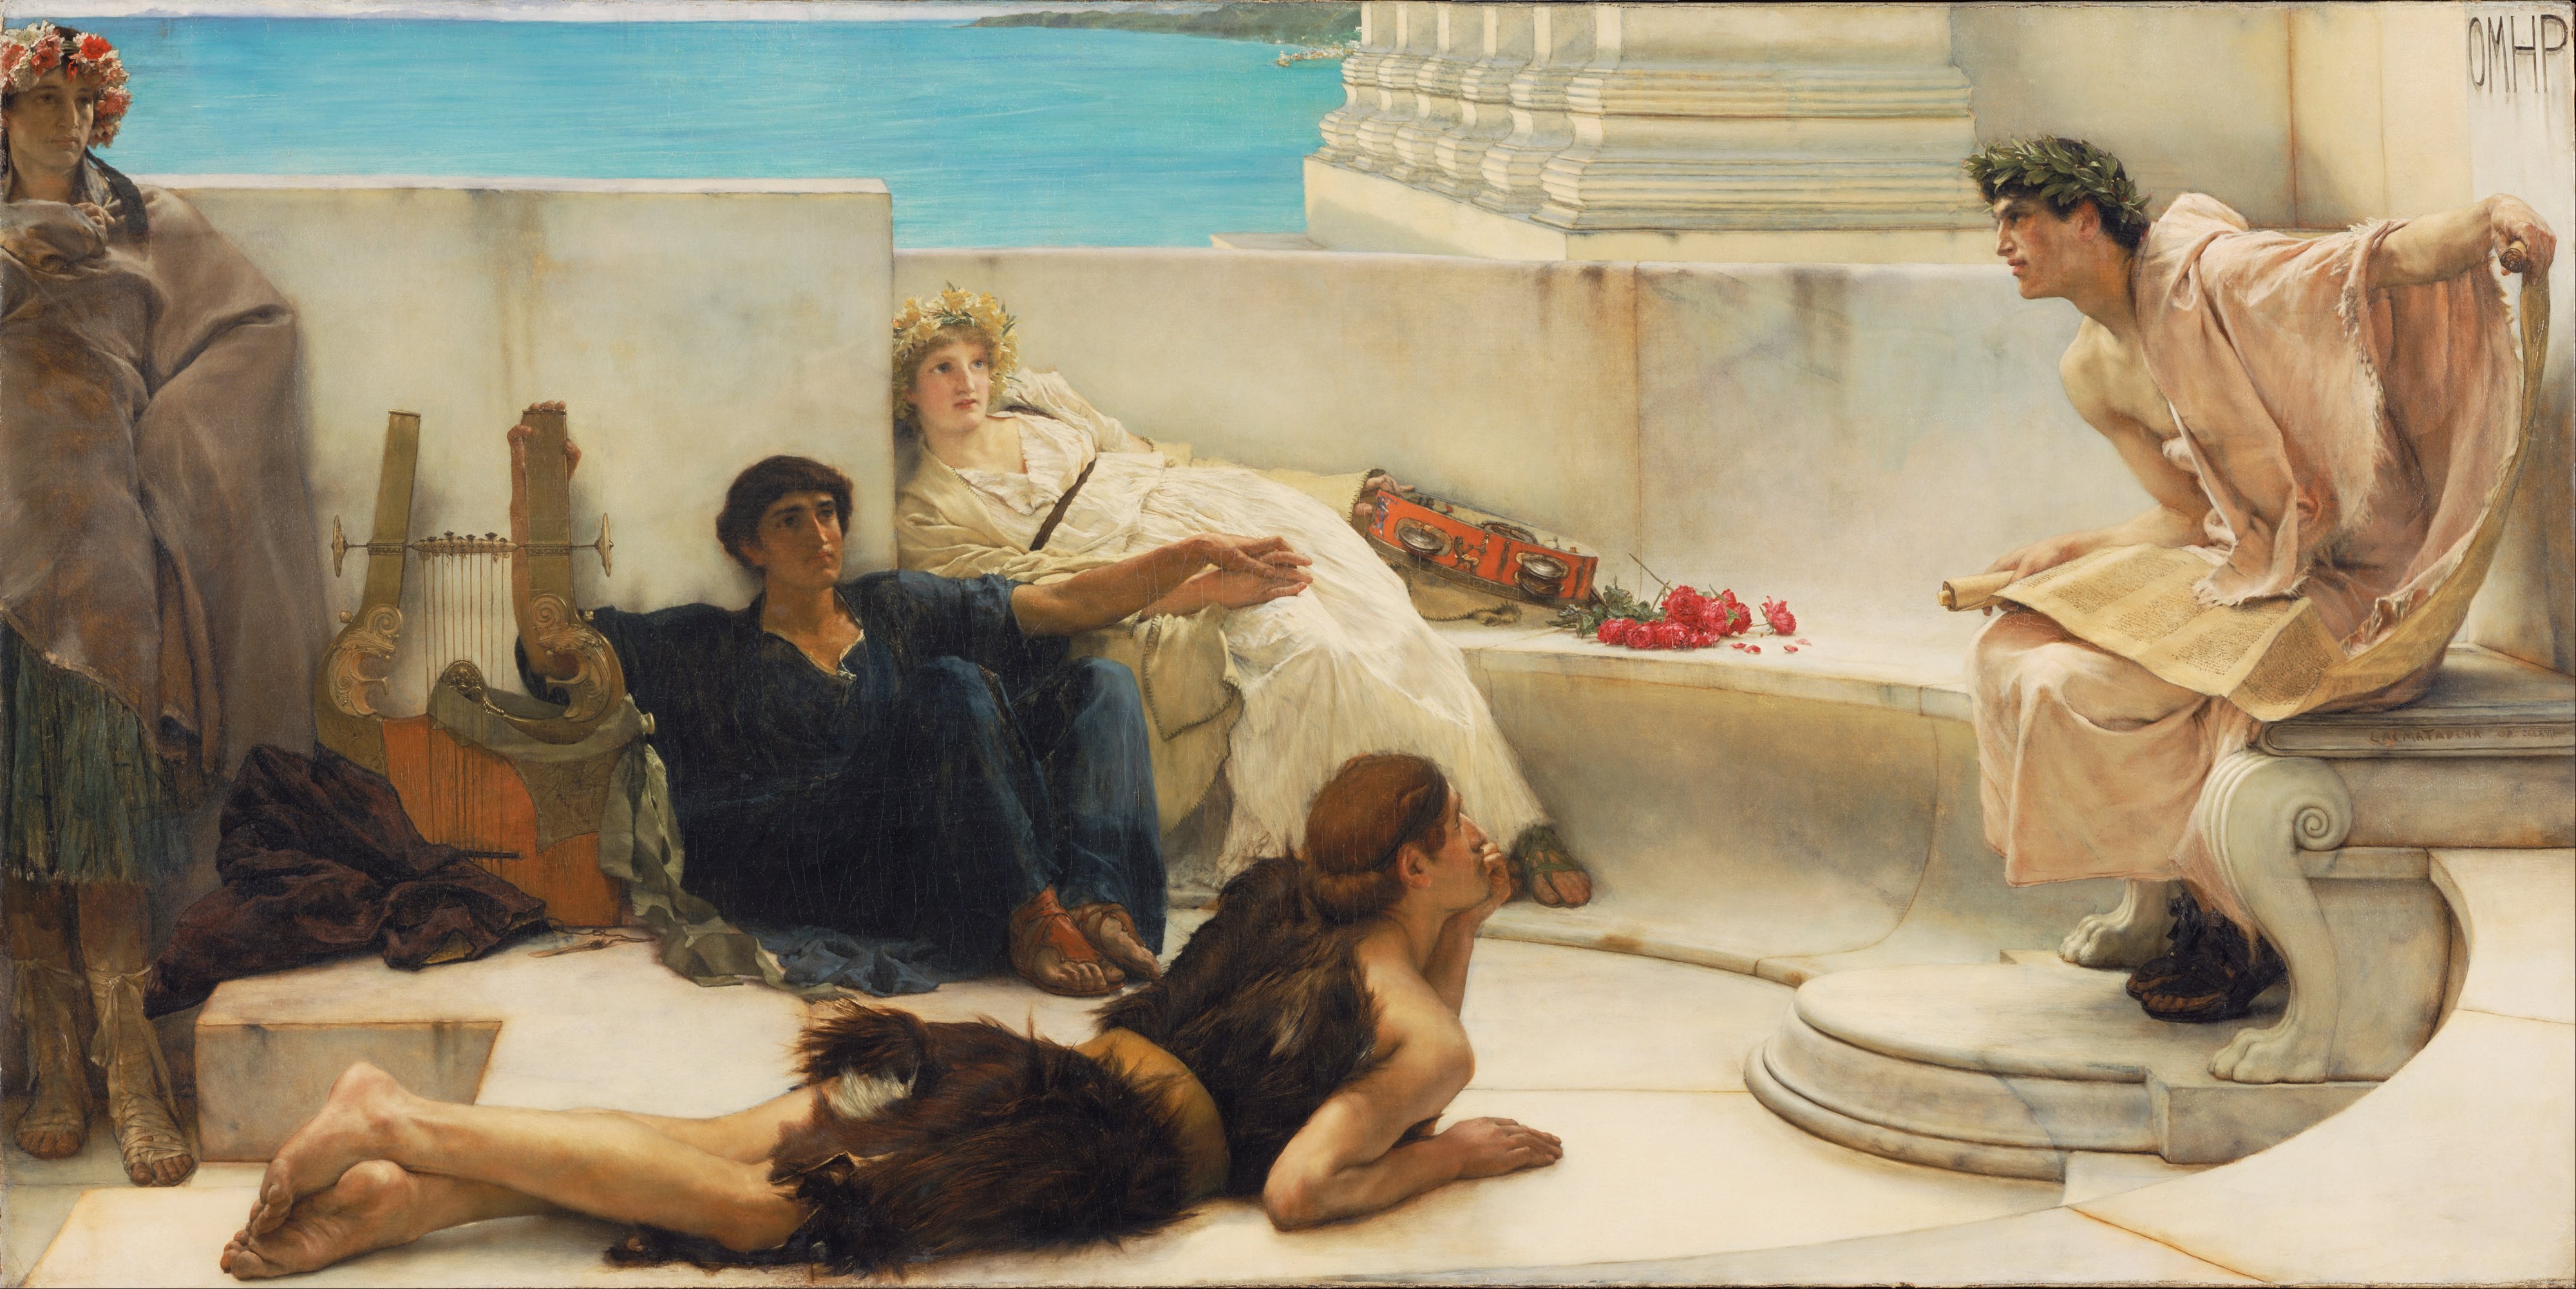 Sir Lawrence Alma-Tadema, English (born Netherlands) - A Reading from Homer - Google Art Project